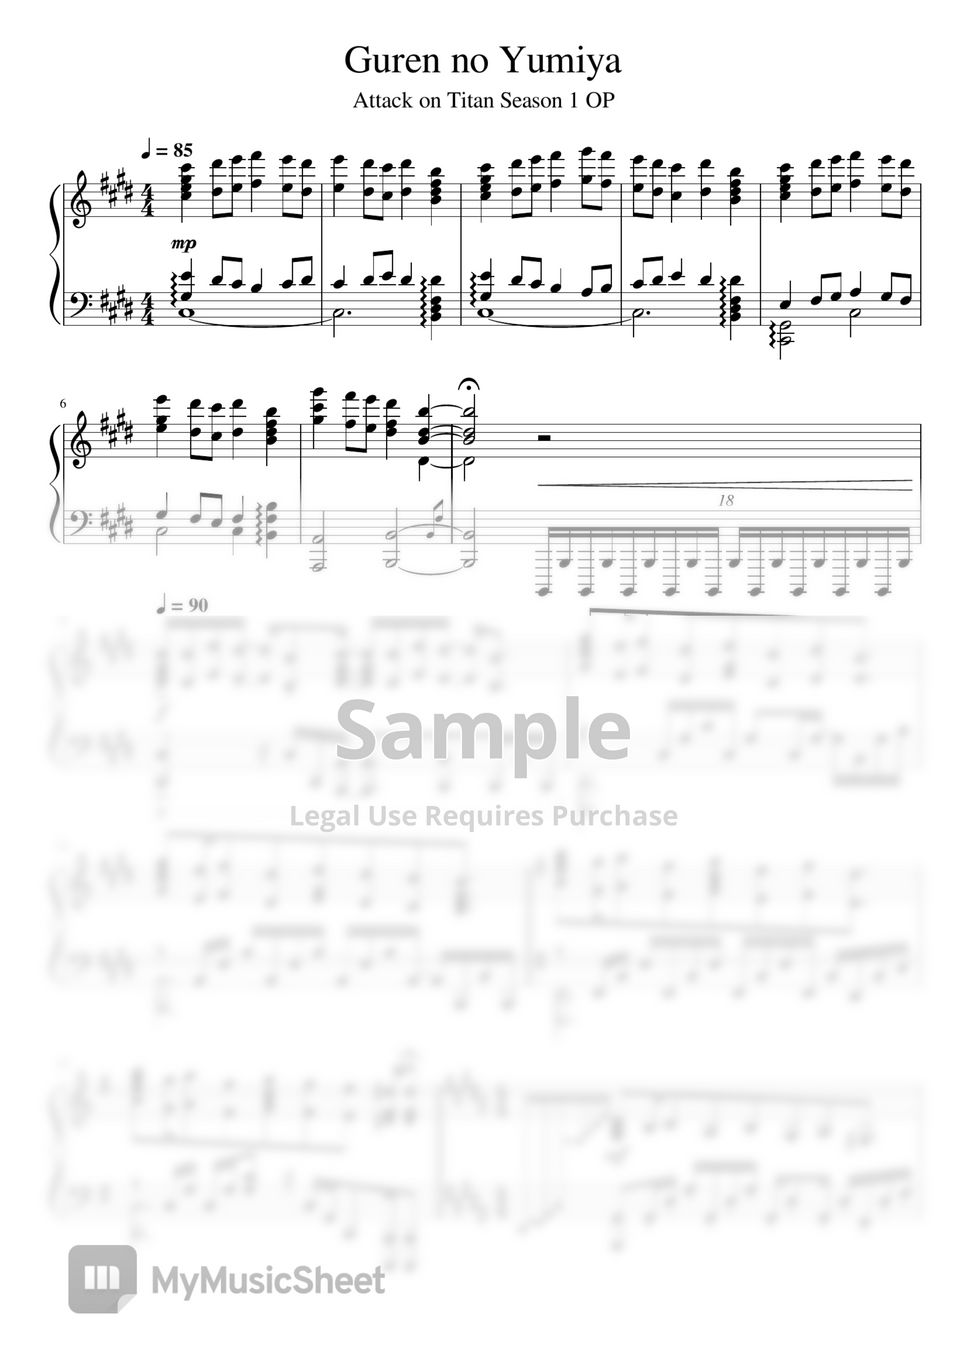 Linked Horizon - Guren no Yumiya - Linked Horizon (Attack on Titan Season 1 OP1) Piano by BWC piano Tutorial